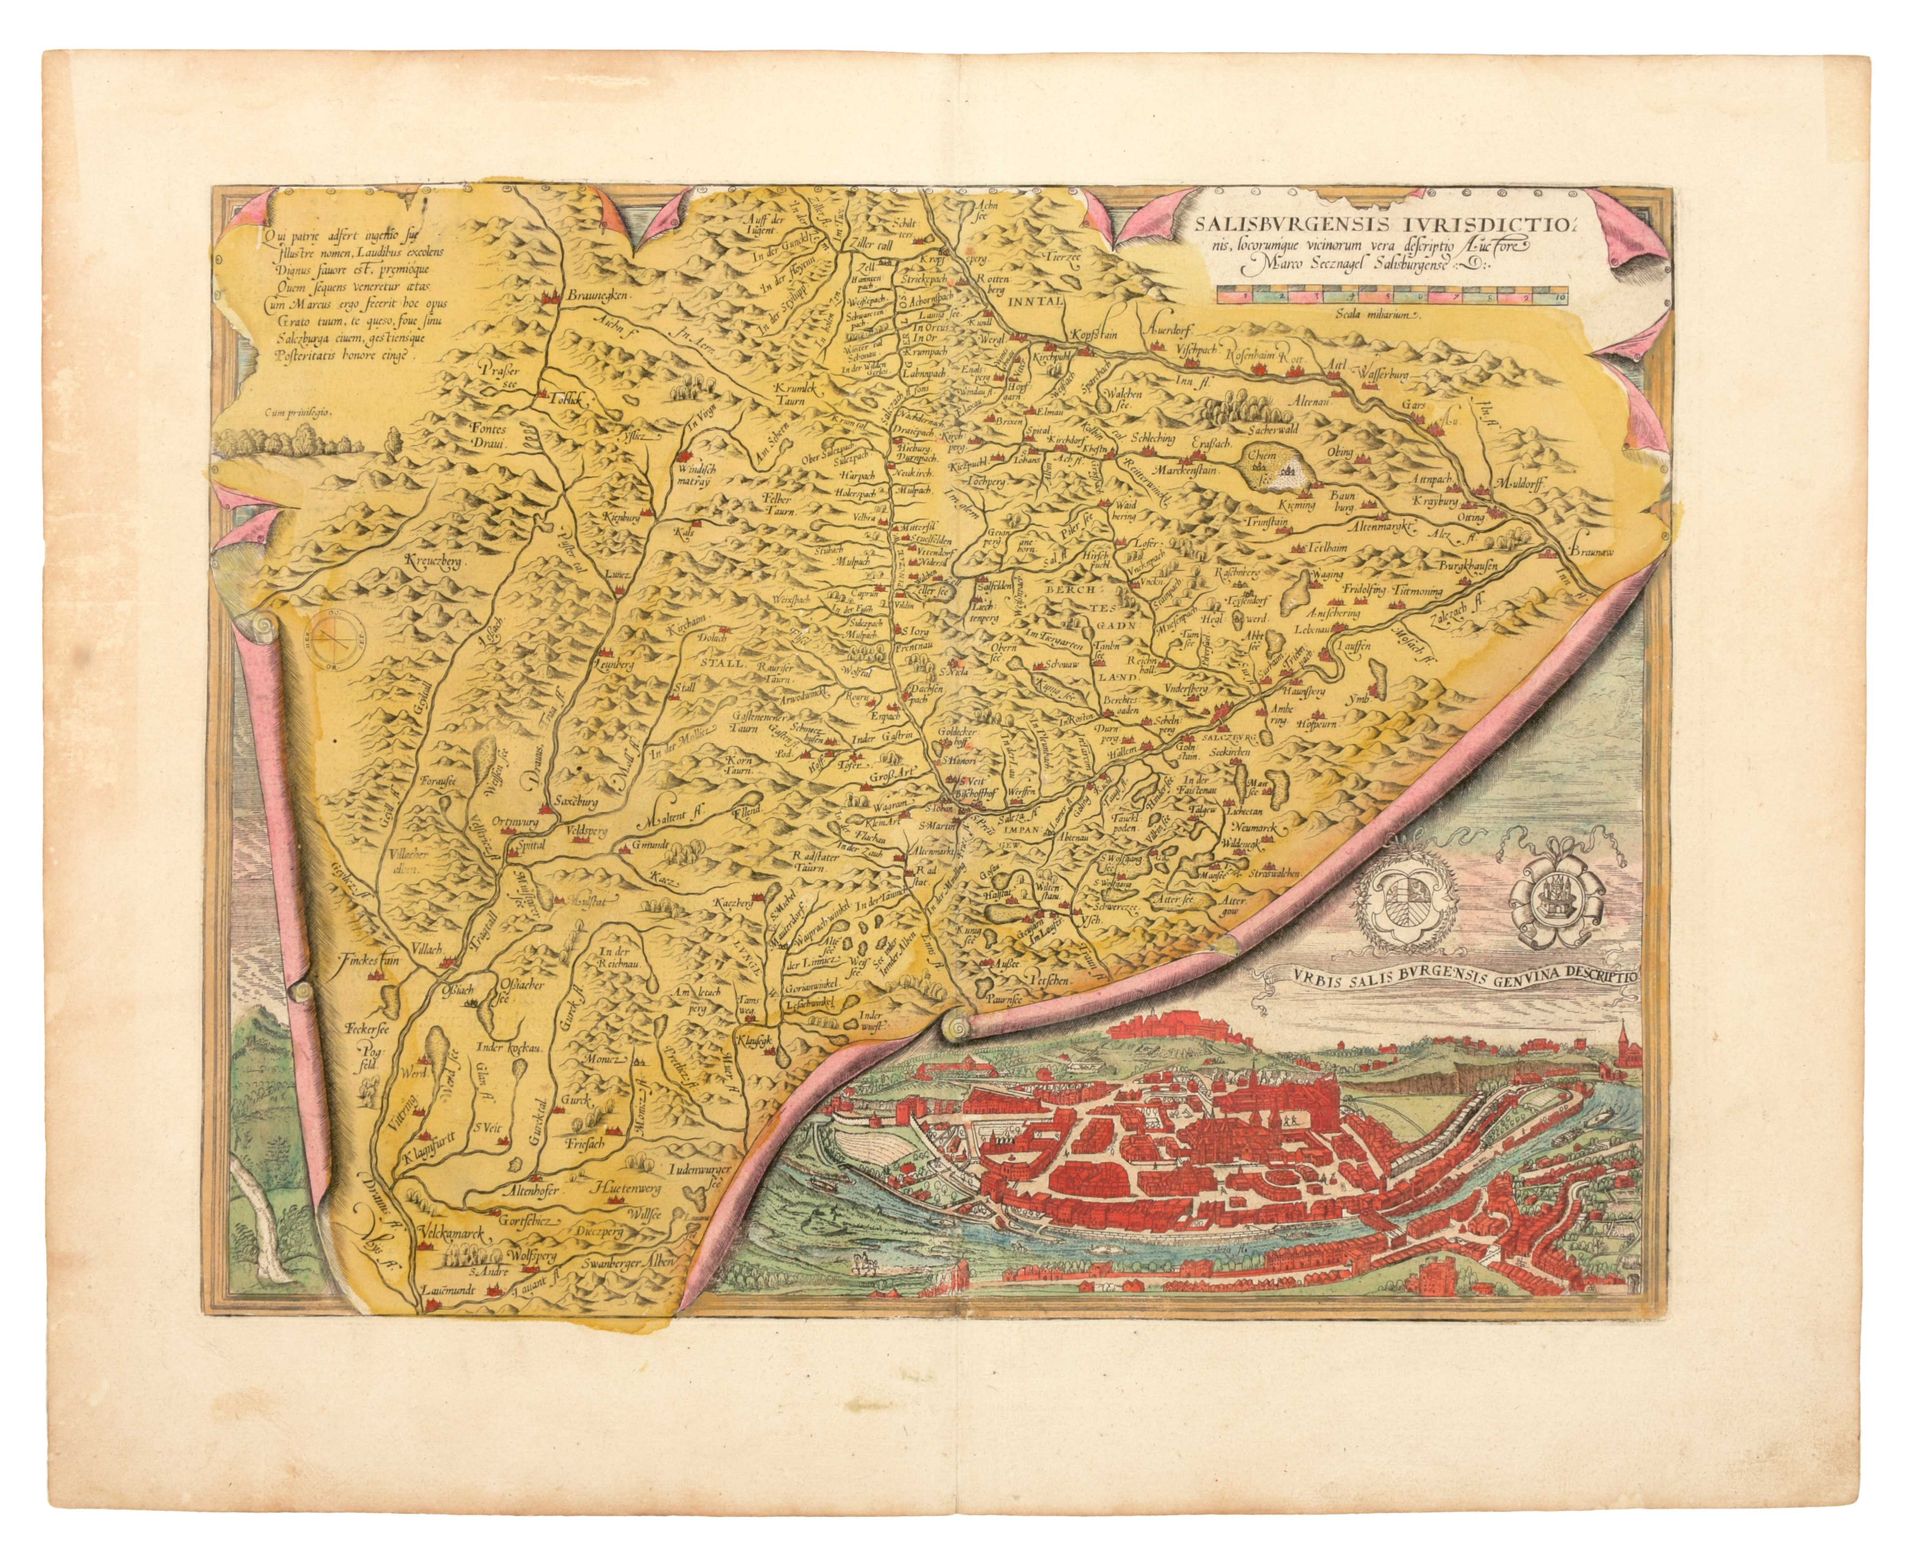 [SALZBURG] Salisburgensis Jurisdictio

Mappa originale a mano (34 x 44 cm) di A.&hellip;